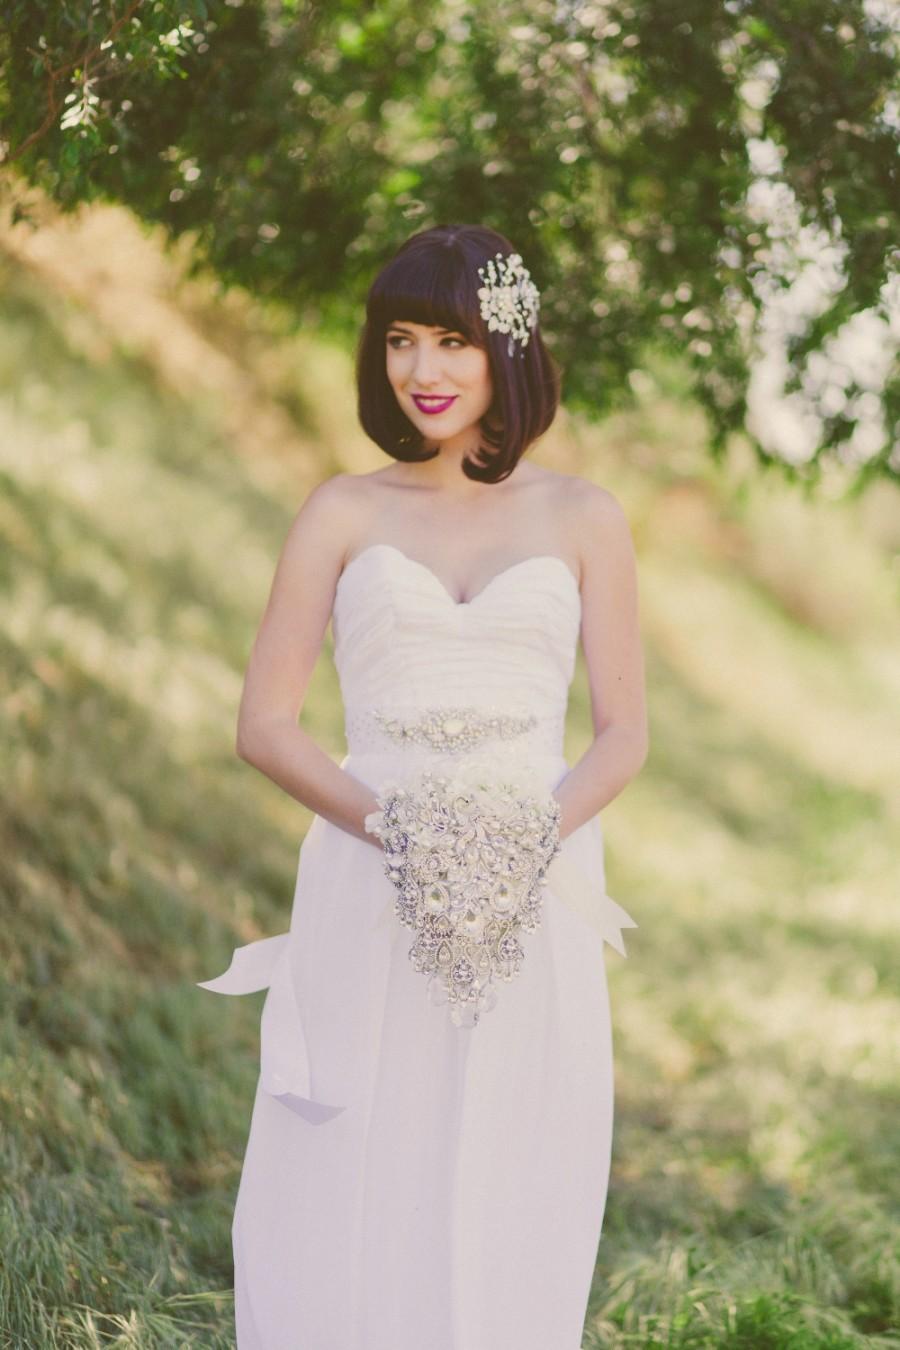 Wedding - Noaki Brooch Bouquets & Bridal Accessories – and a Chic Vintage Brides Birthday Exclusive 15% Discount